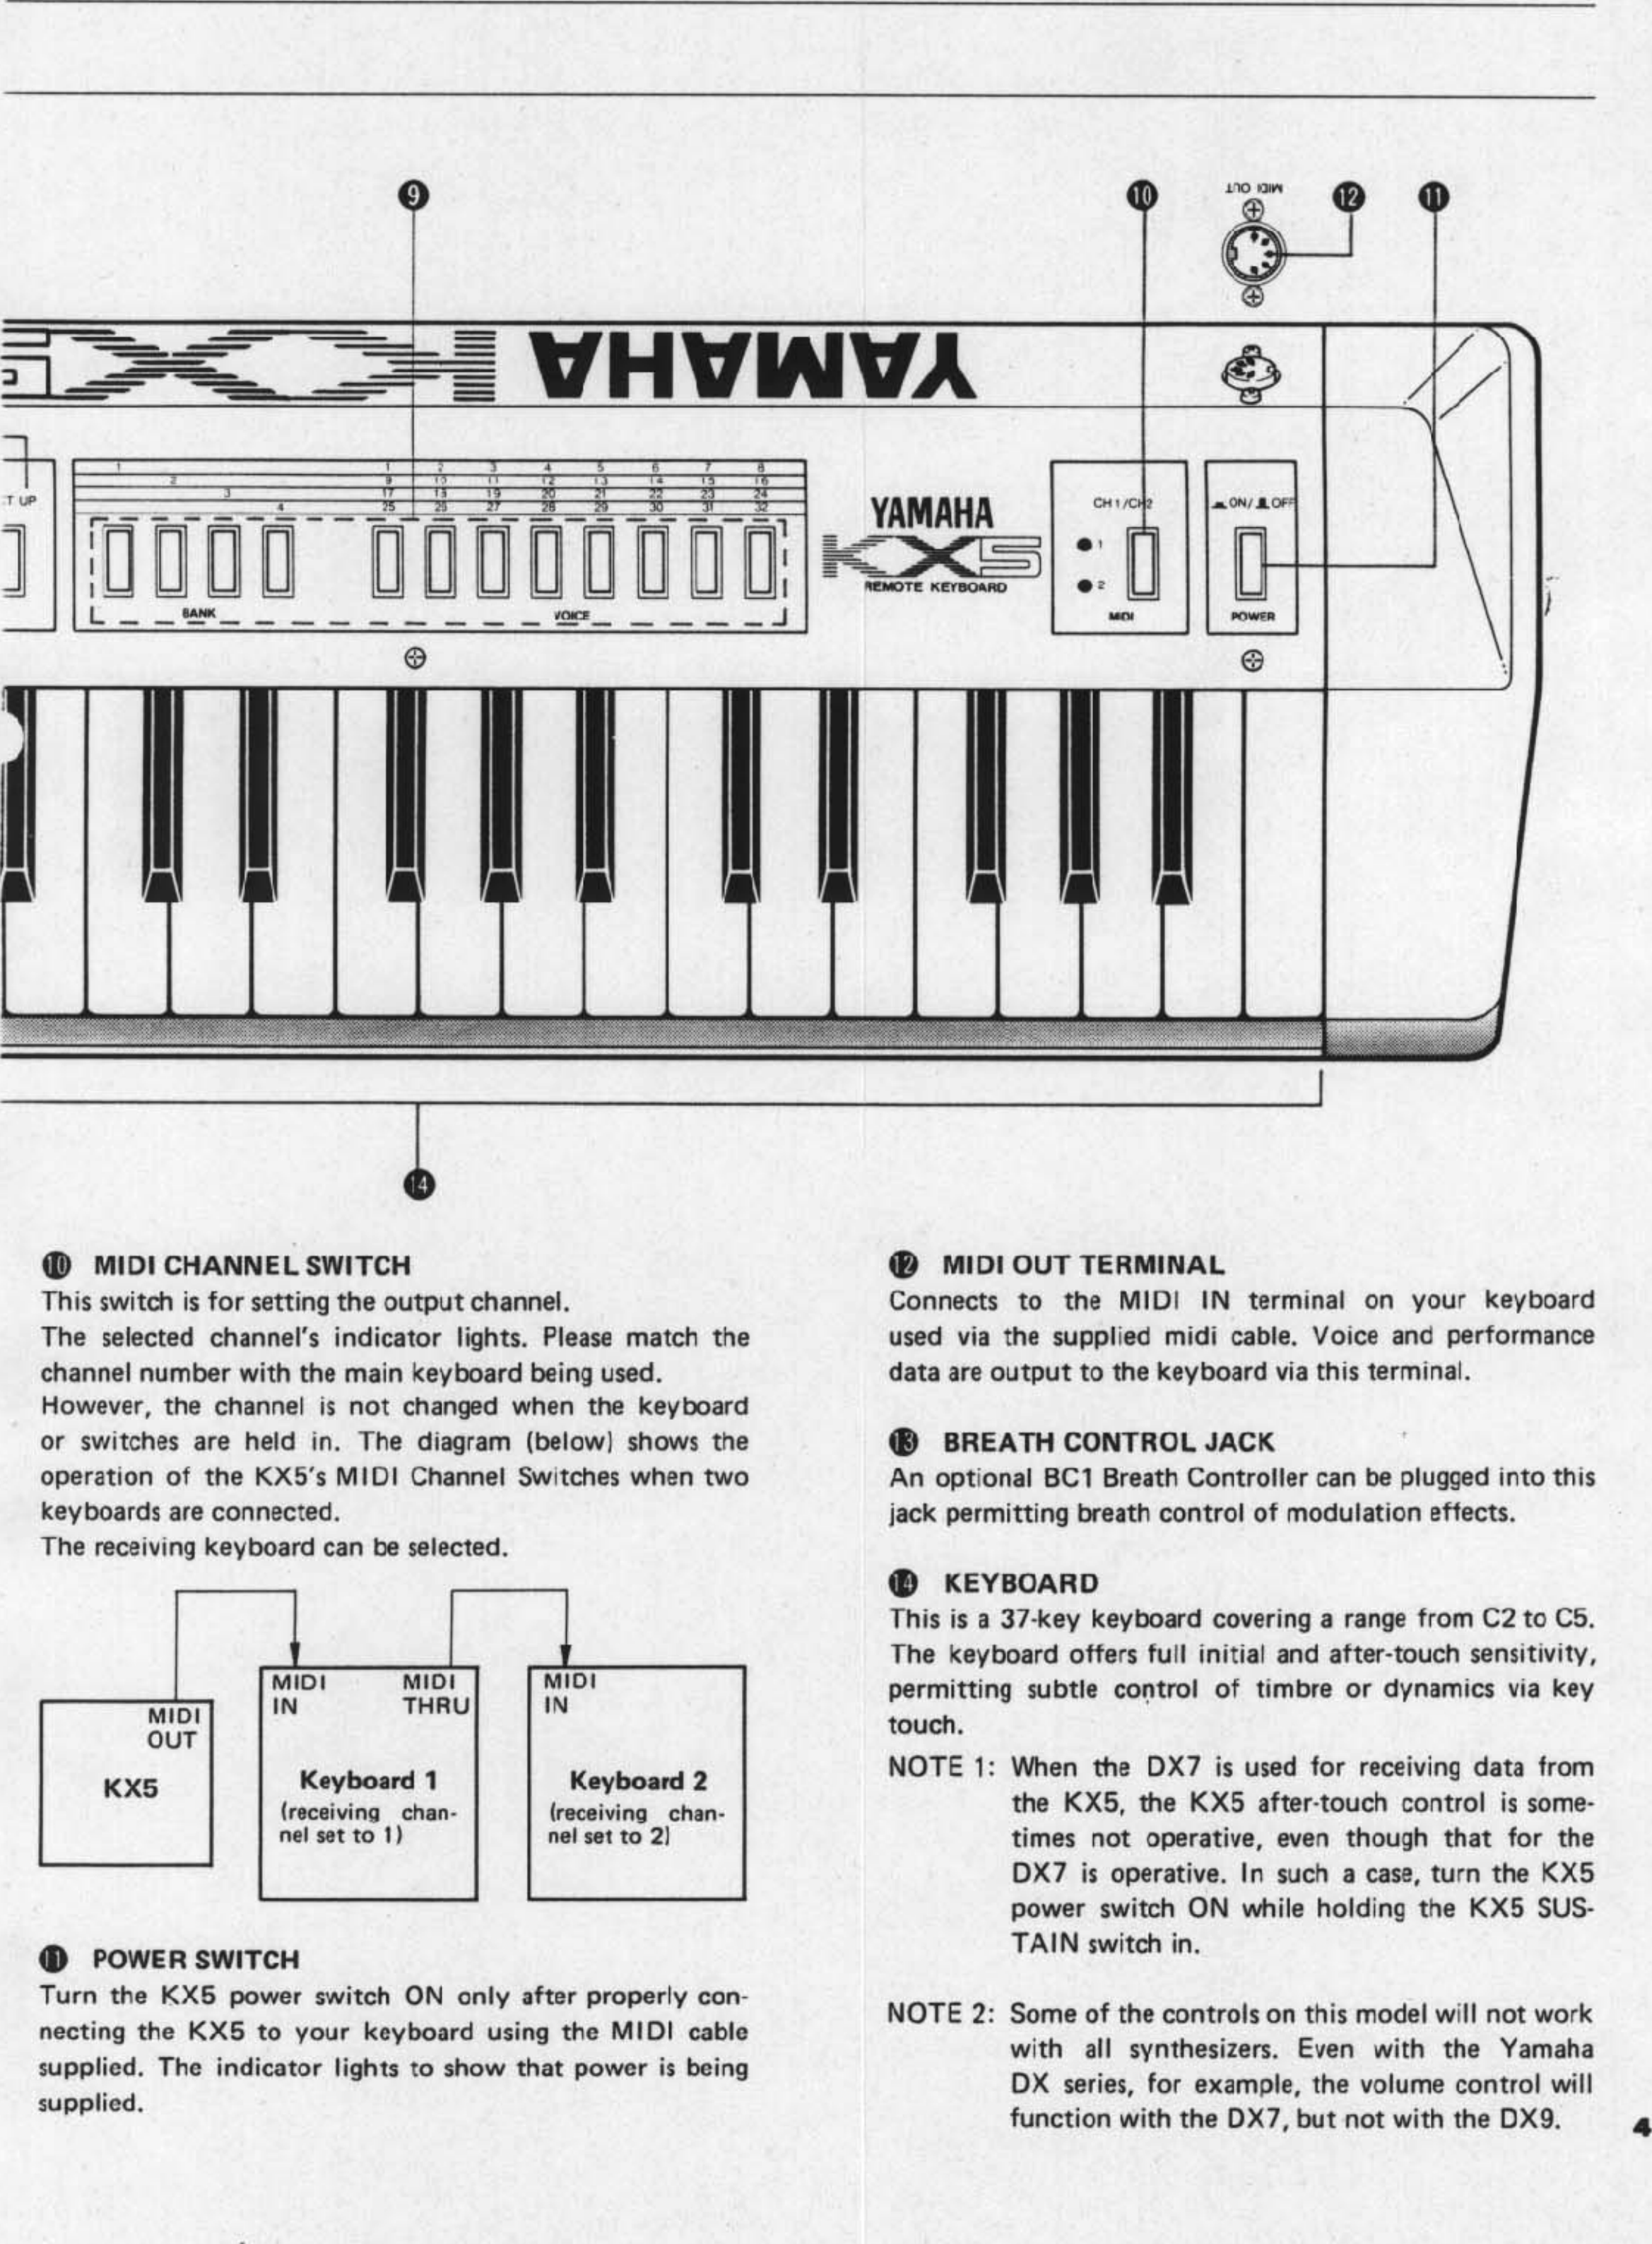 Page 5 of 8 - Yamaha  KX5 Owner's Manual (Image) KX5E